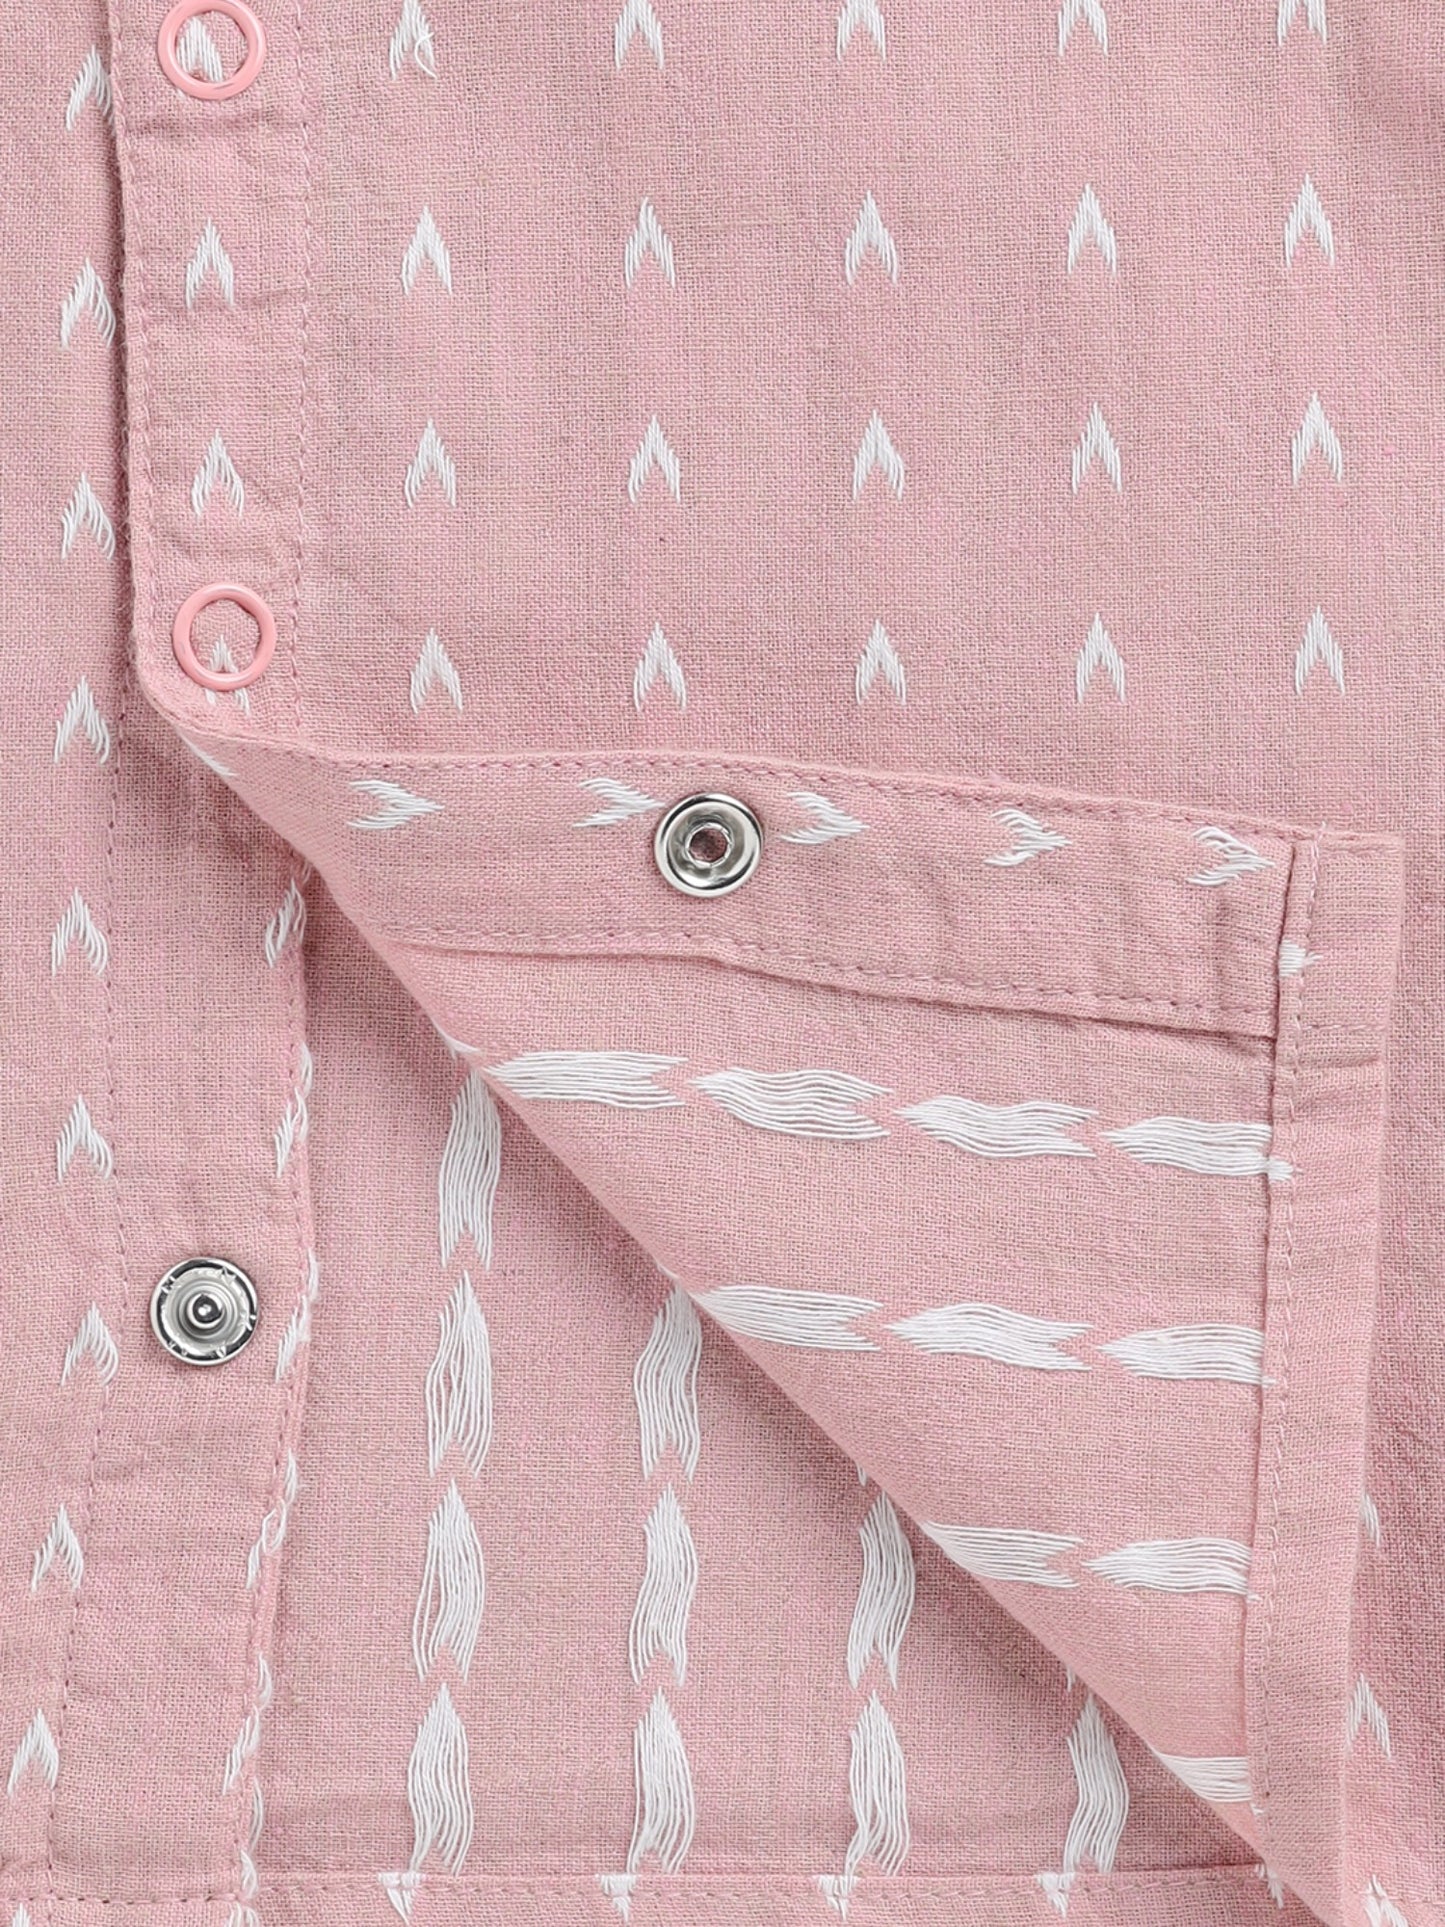 Handloom Pink Cotton Full Sleeve Nightwear Set